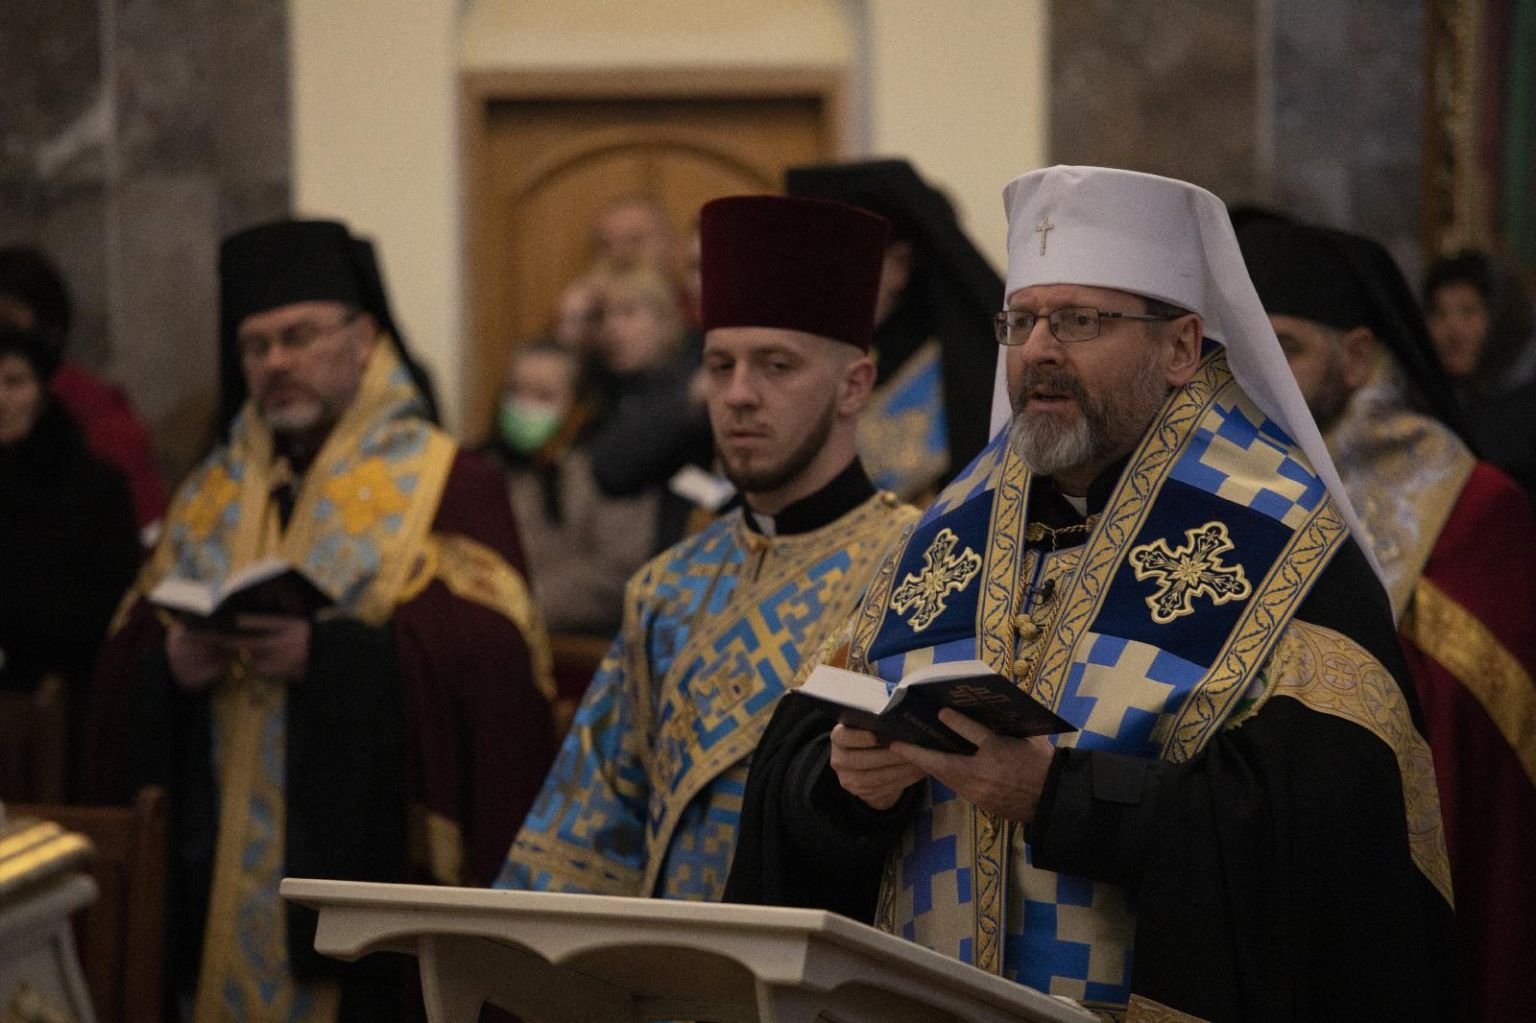 Ukrainian archbishop tearfully recounts the horrors of war